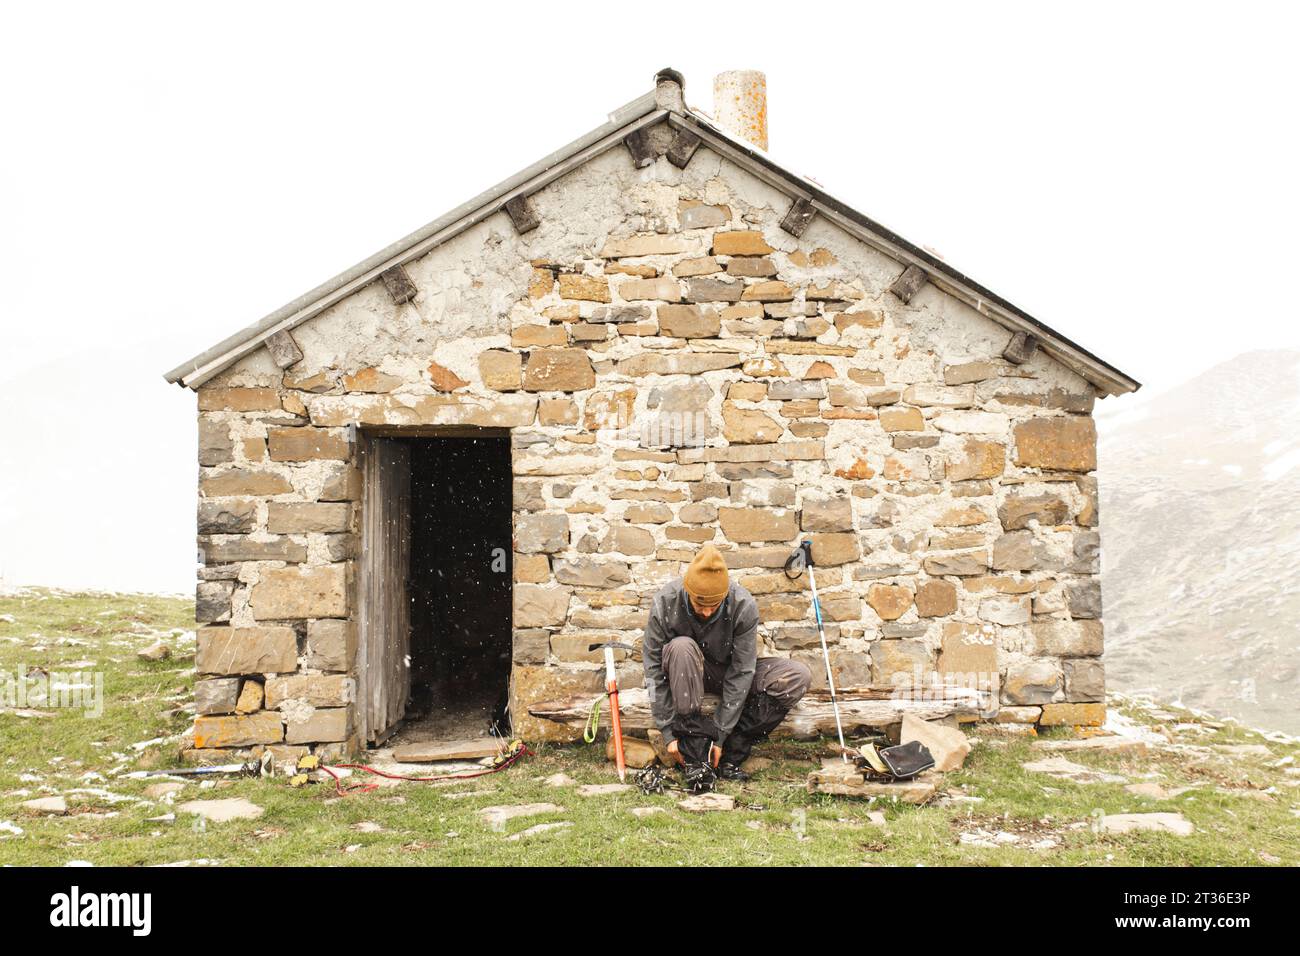 Man tying shoe near brick house on mountain Stock Photo